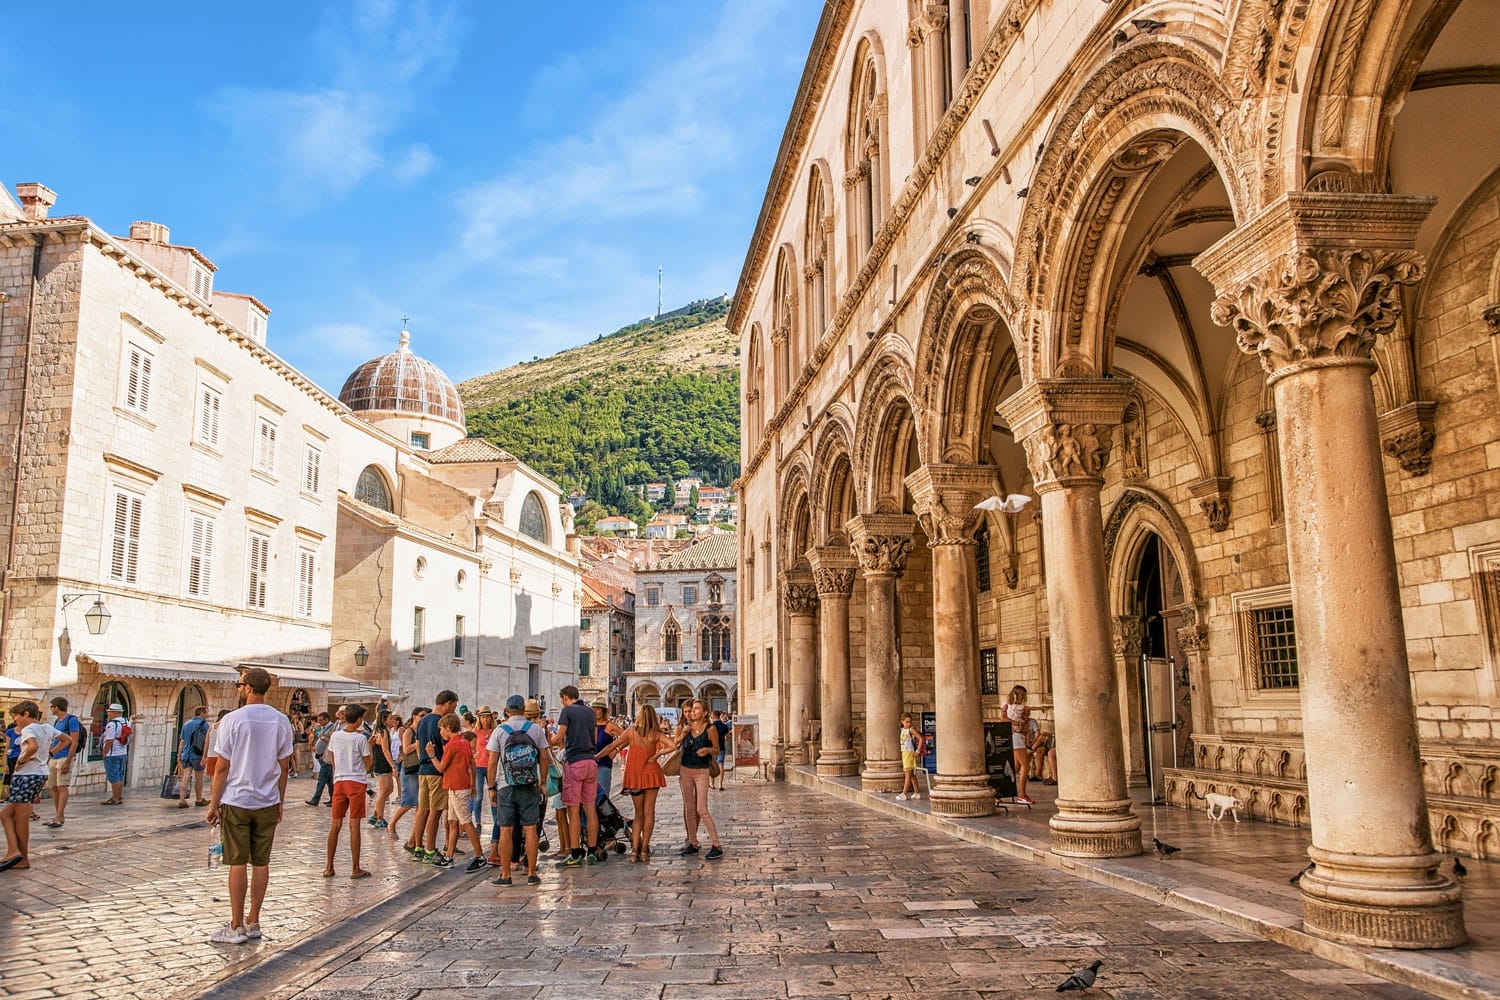 Rector Palace on Stradun Street in the Old city of Dubrovnik, Croatia